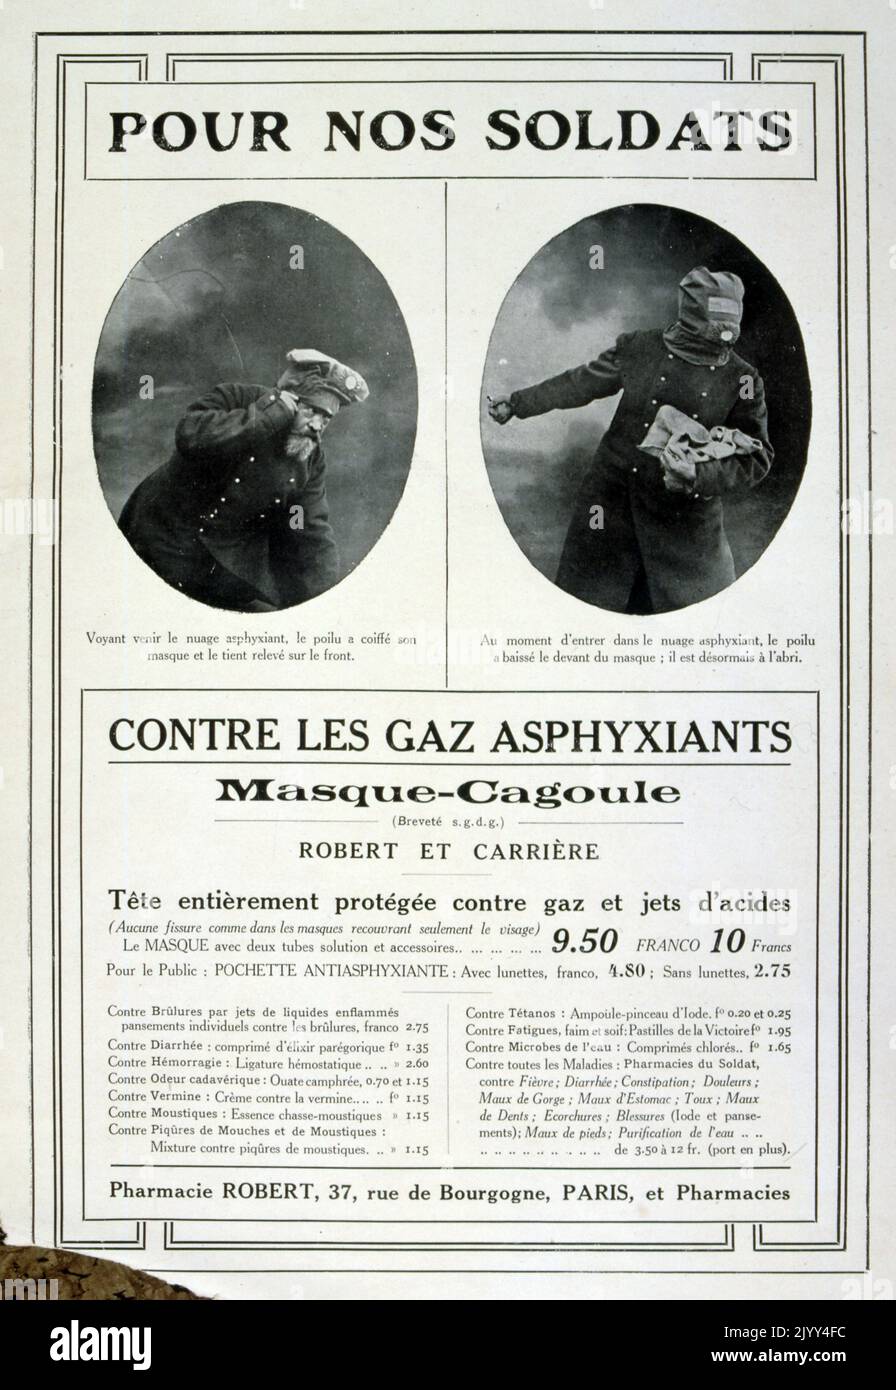 Guerra mondiale francese un annuncio per maschere protettive a gas, 1915 Foto Stock